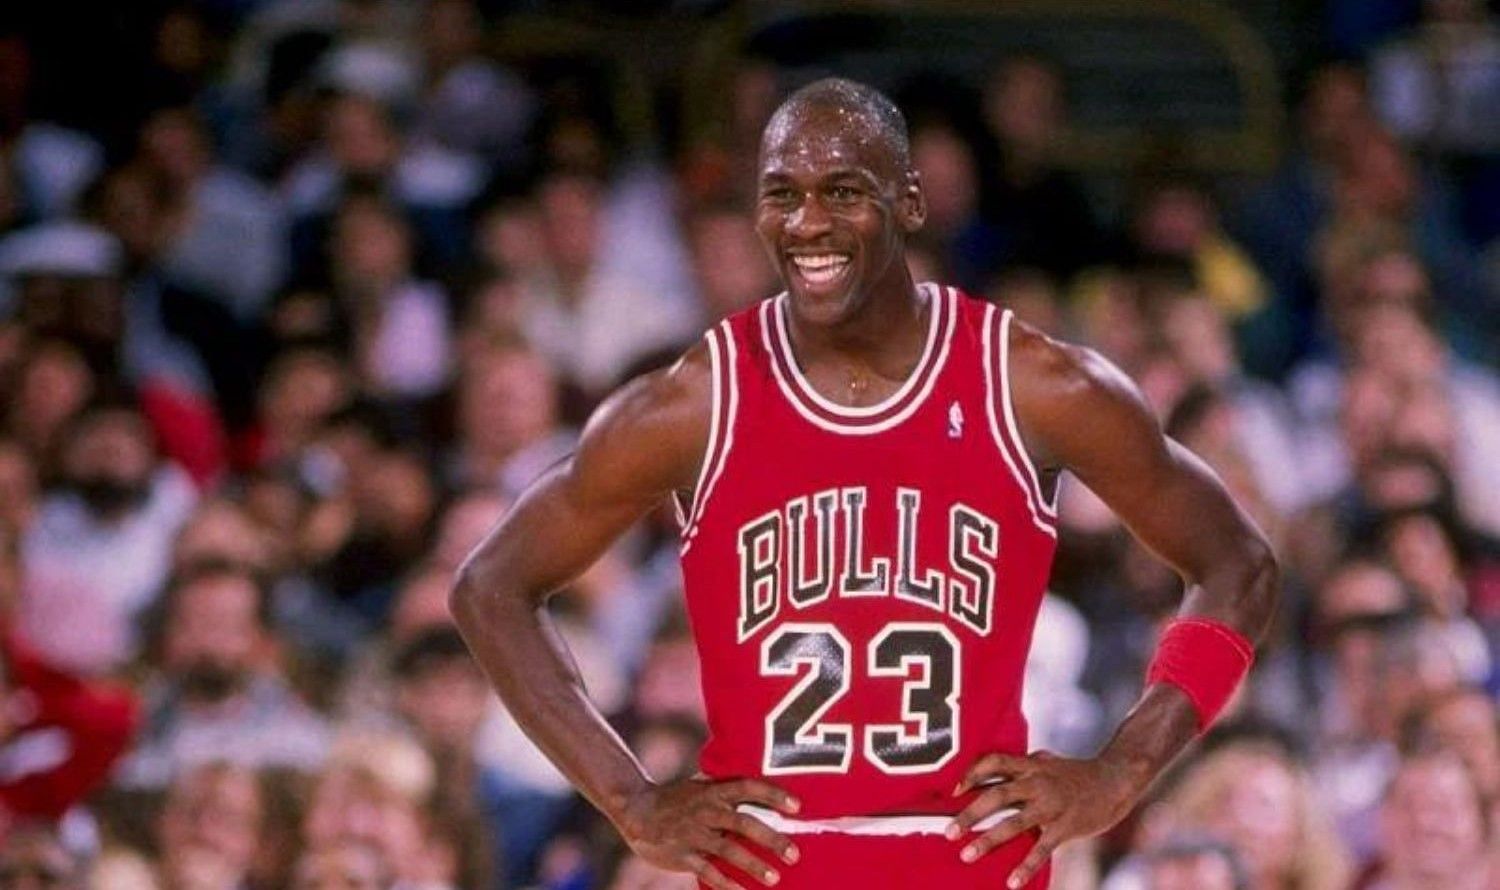 Michael Jordan was nursing a bruised knee when he reached 10,000 points in 1989.